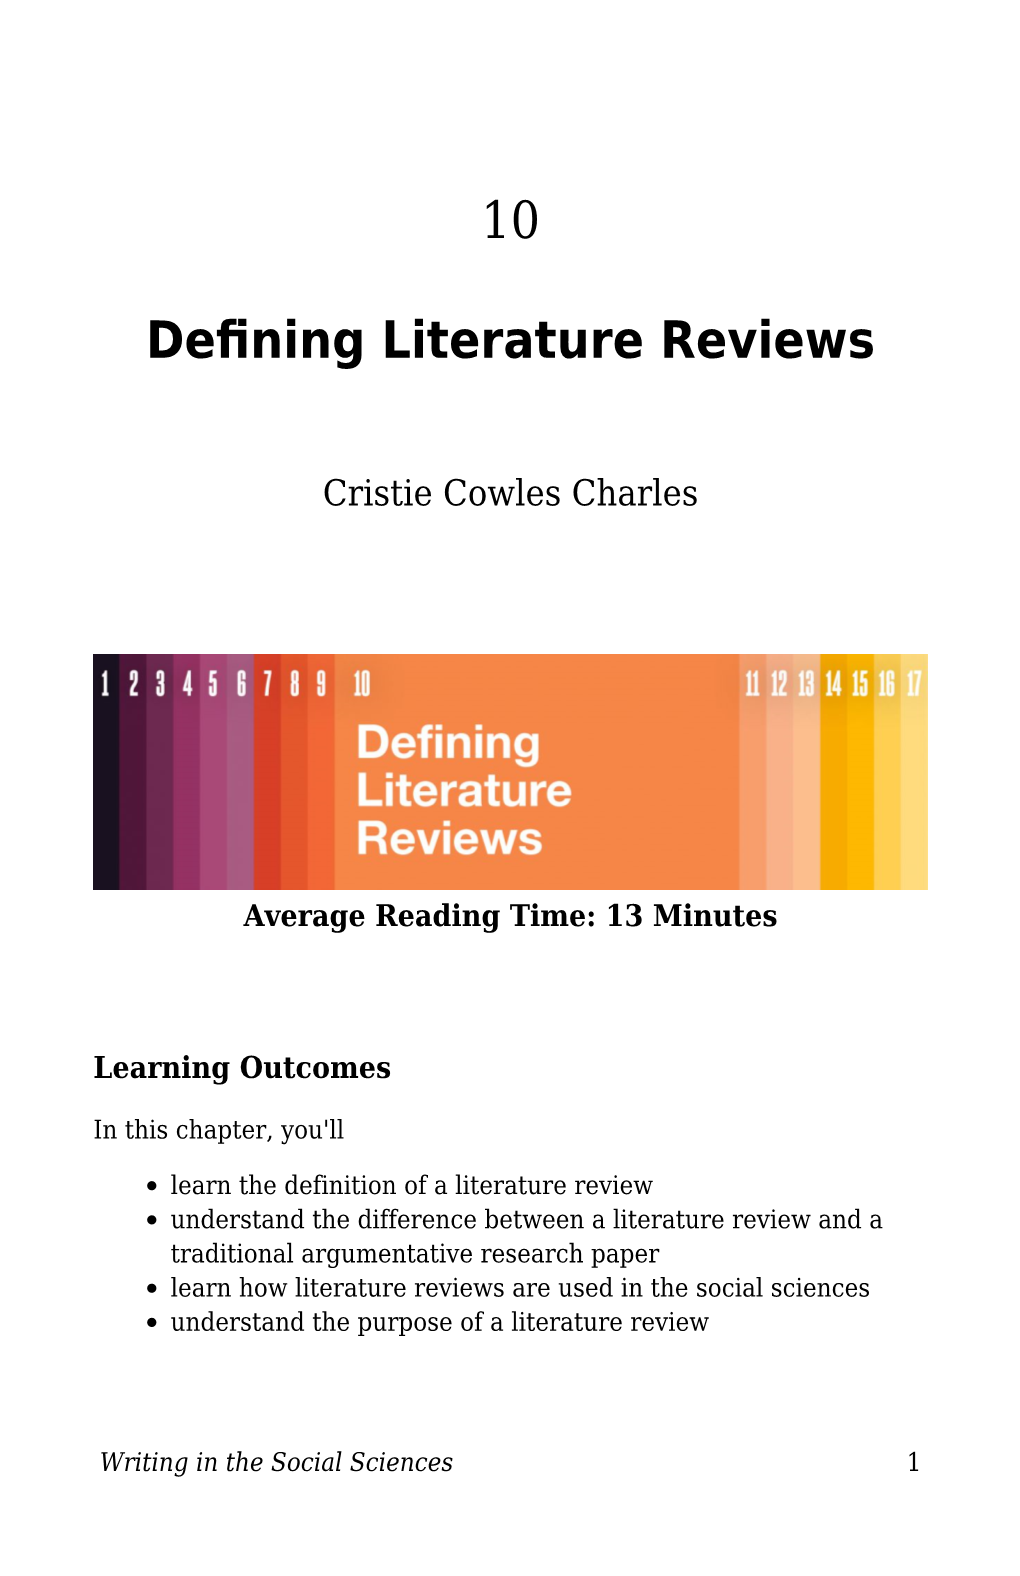 Defining Literature Reviews